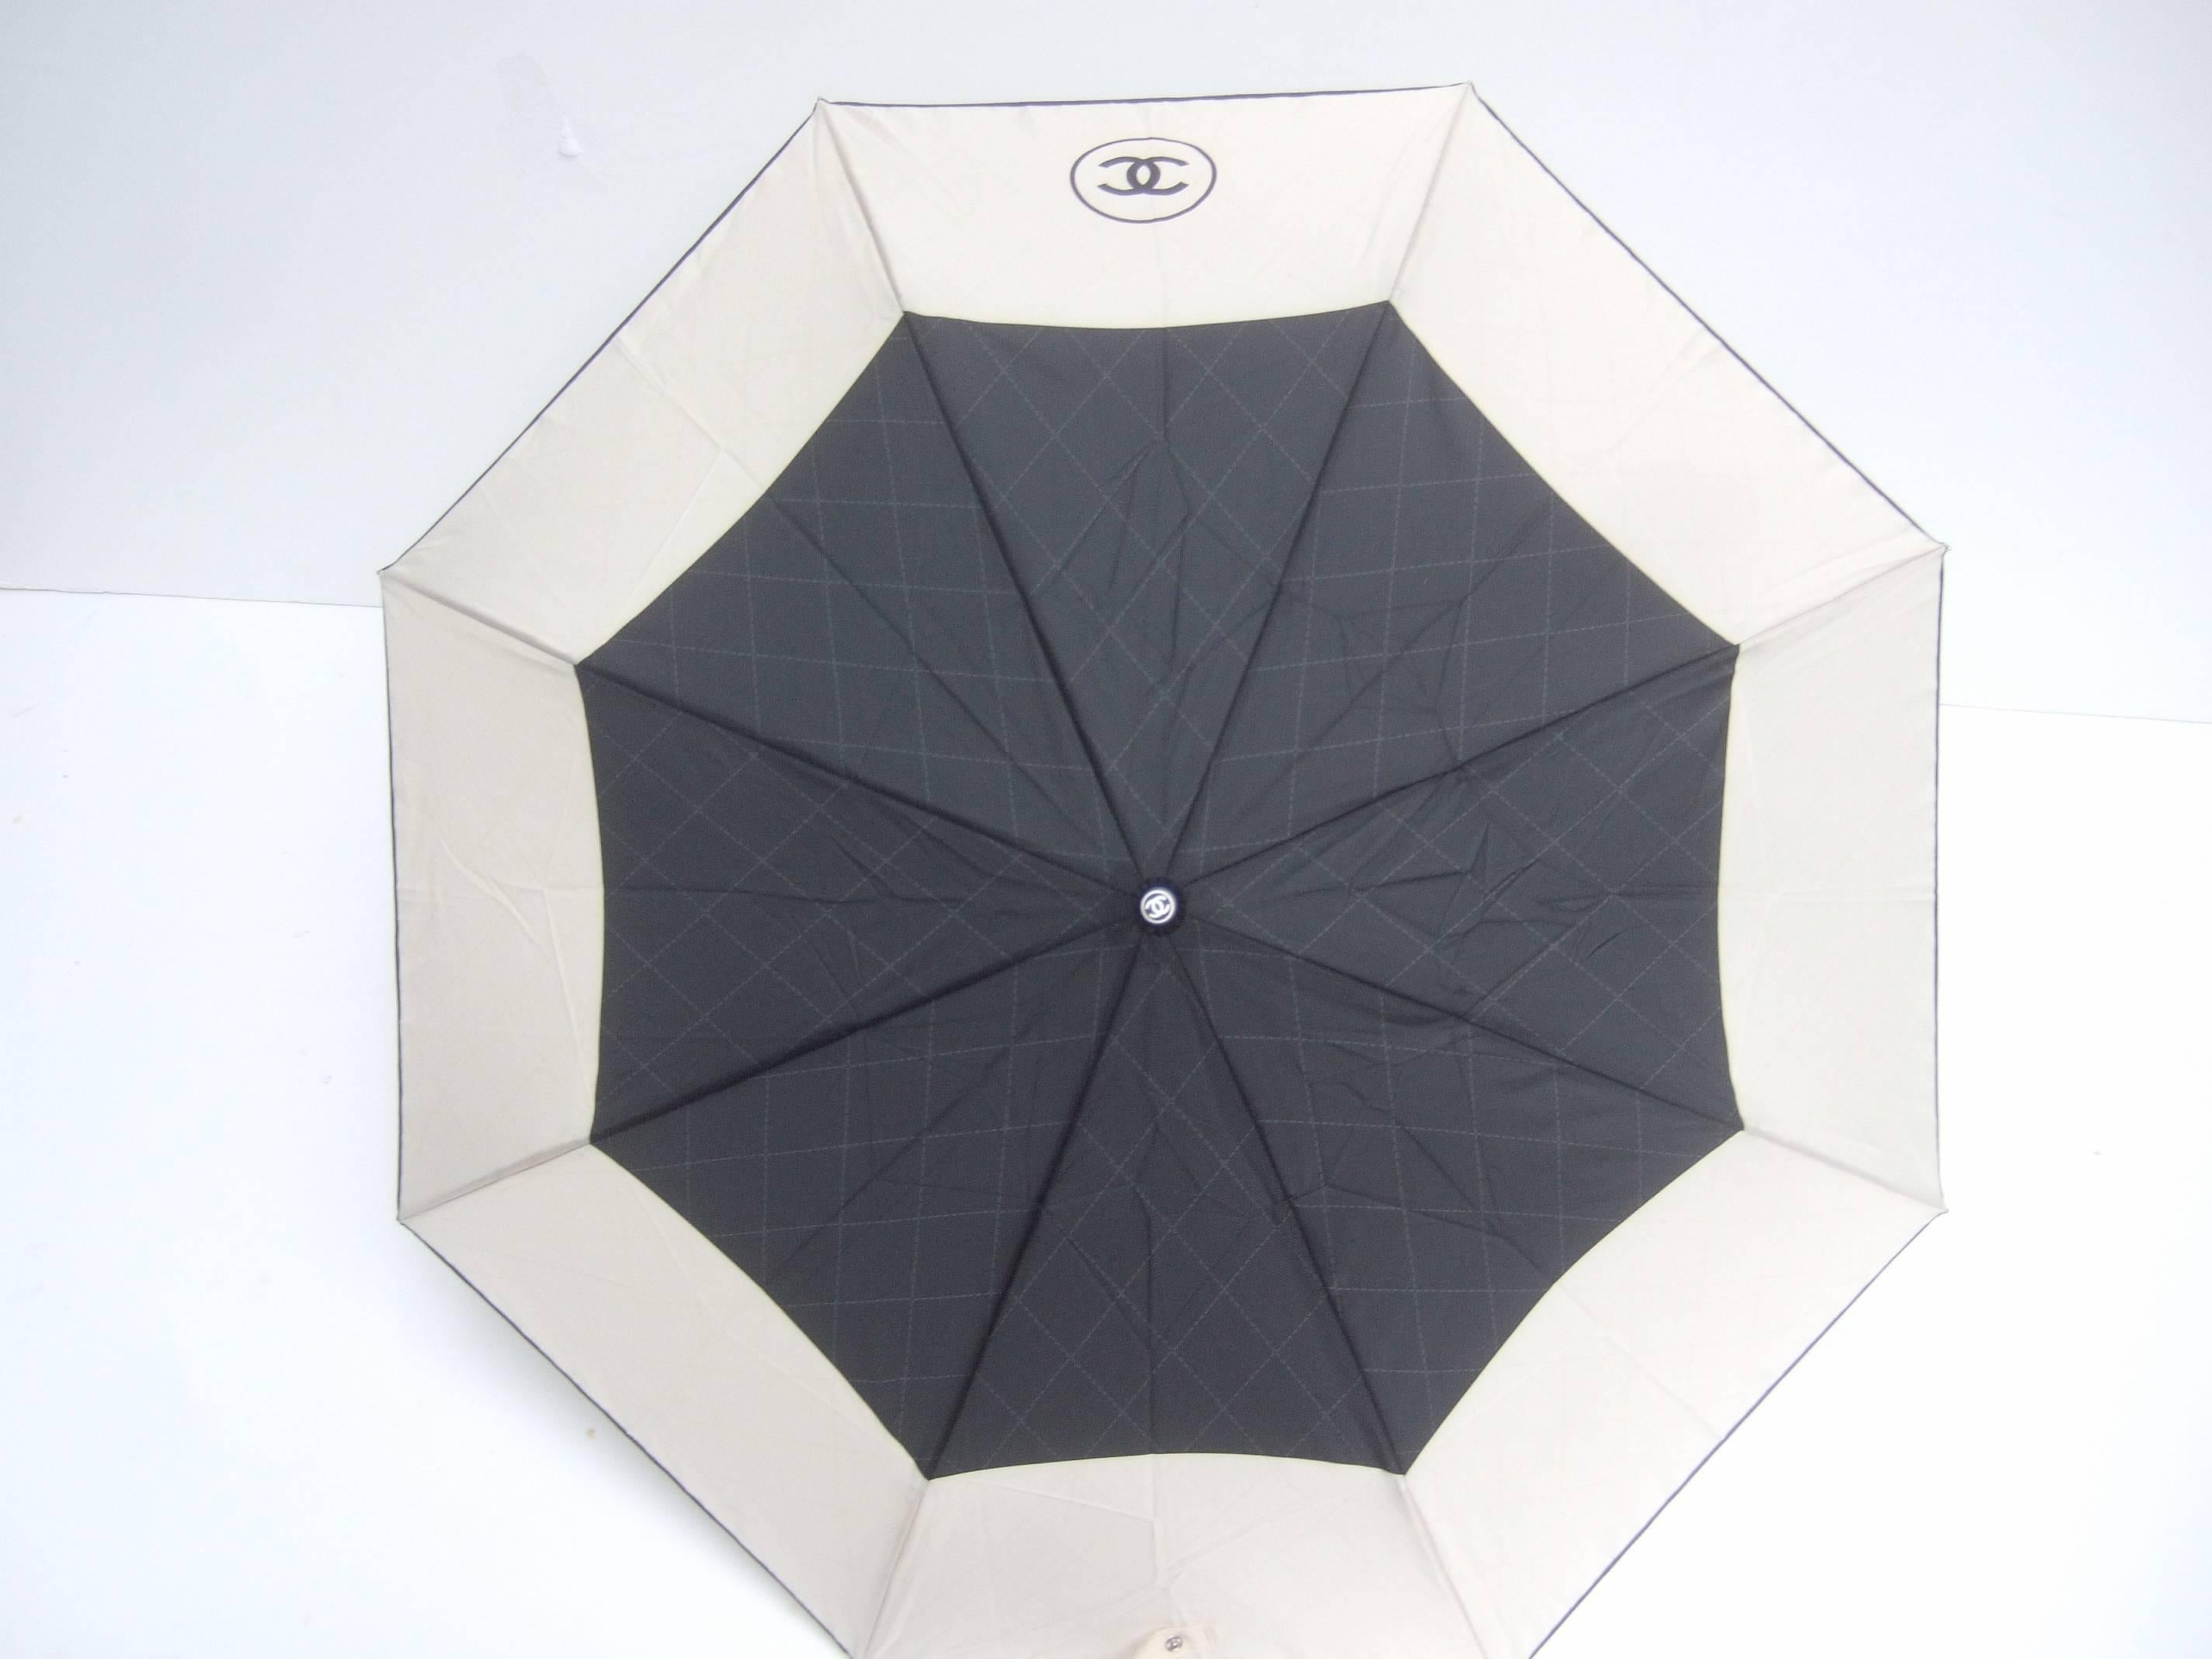 Chanel Stylish Black and Tan Nylon Umbrella in Chanel Box 1